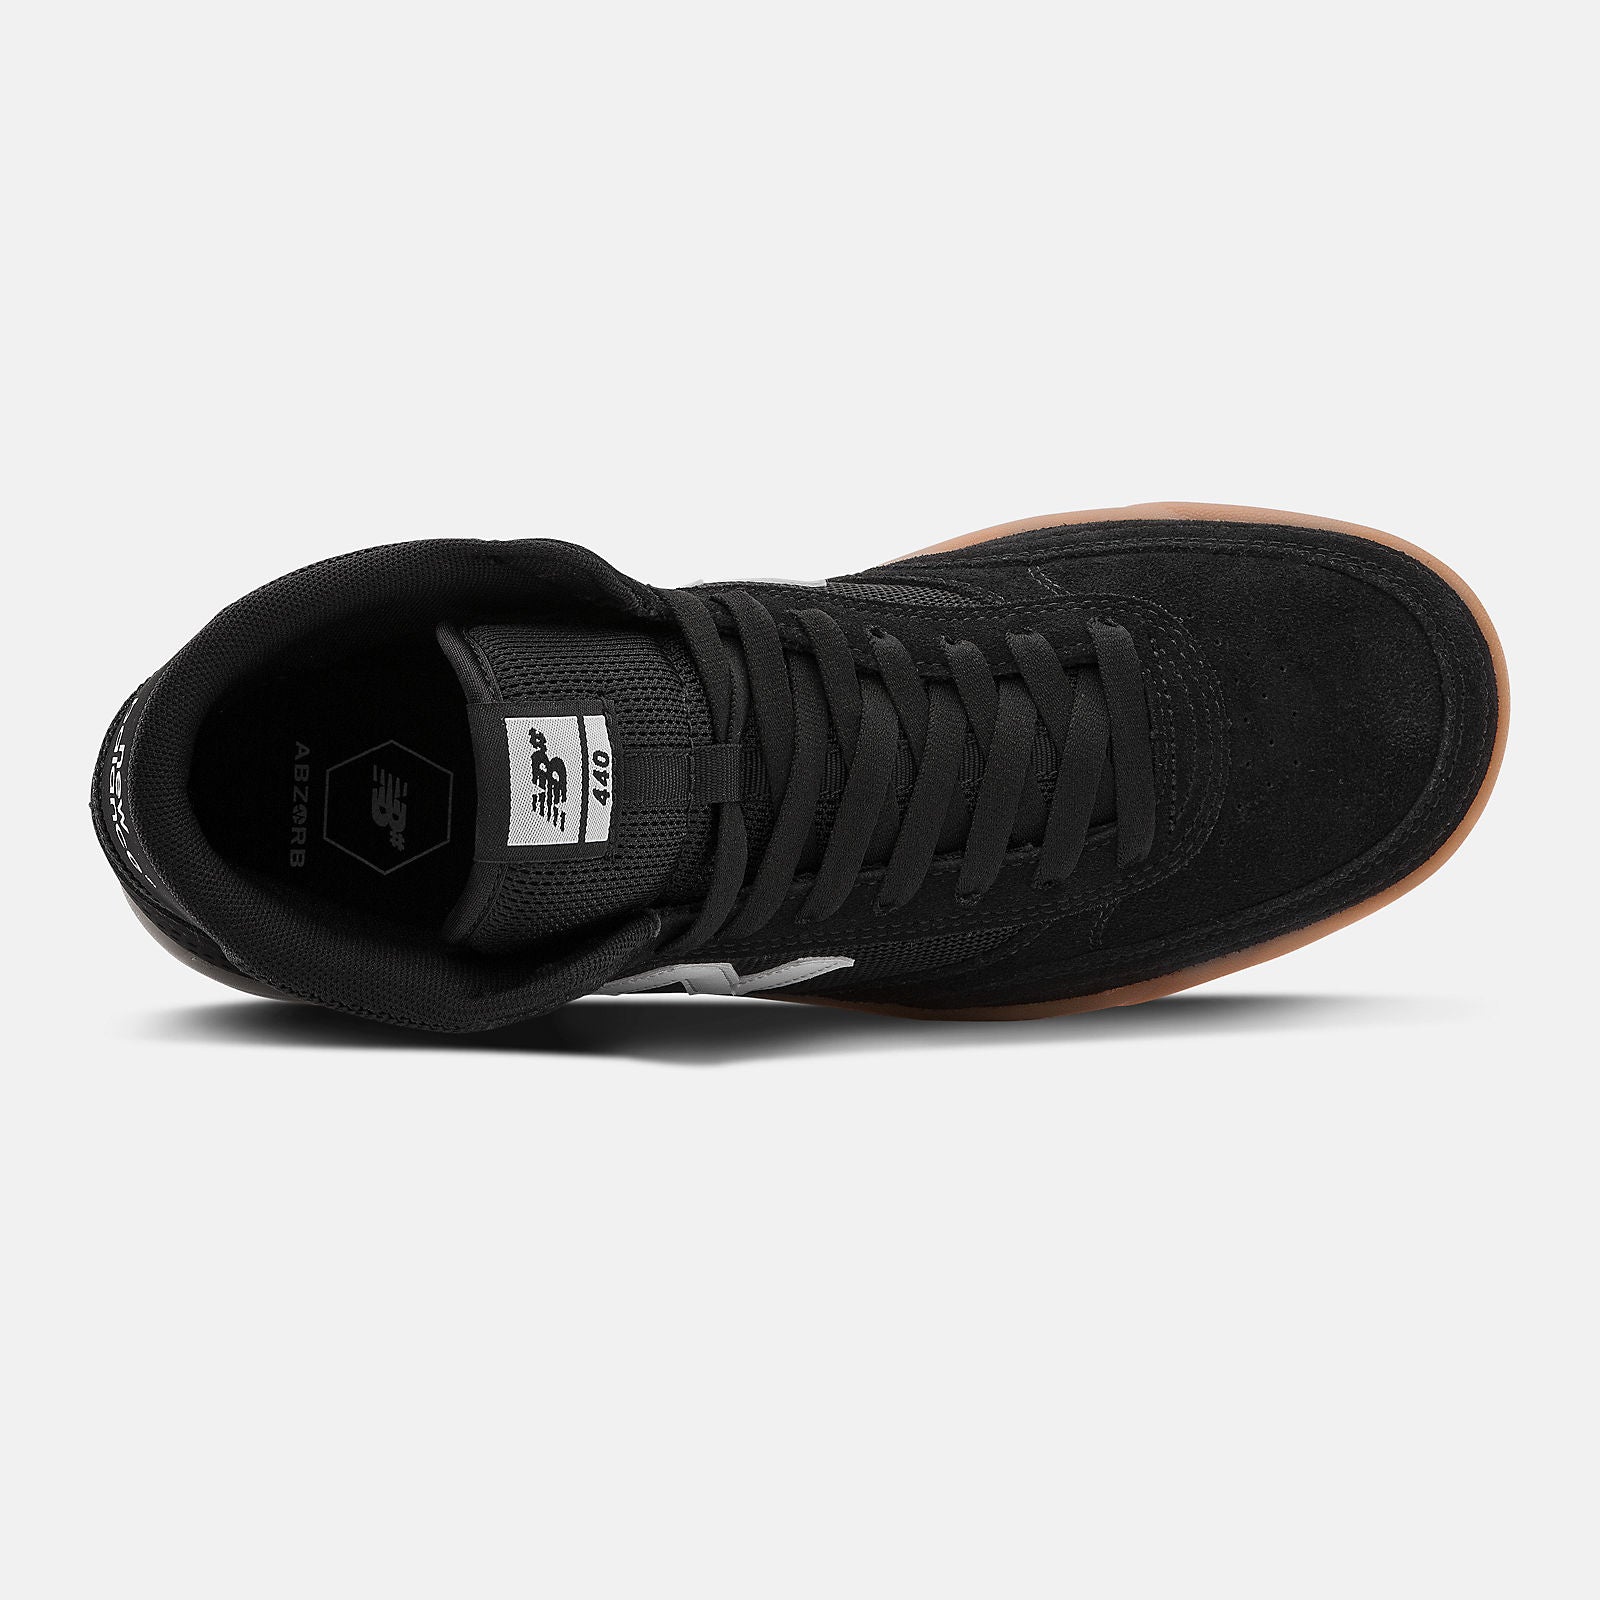 Black/Gum NB Numeric NM440HRD Skate Shoe Top